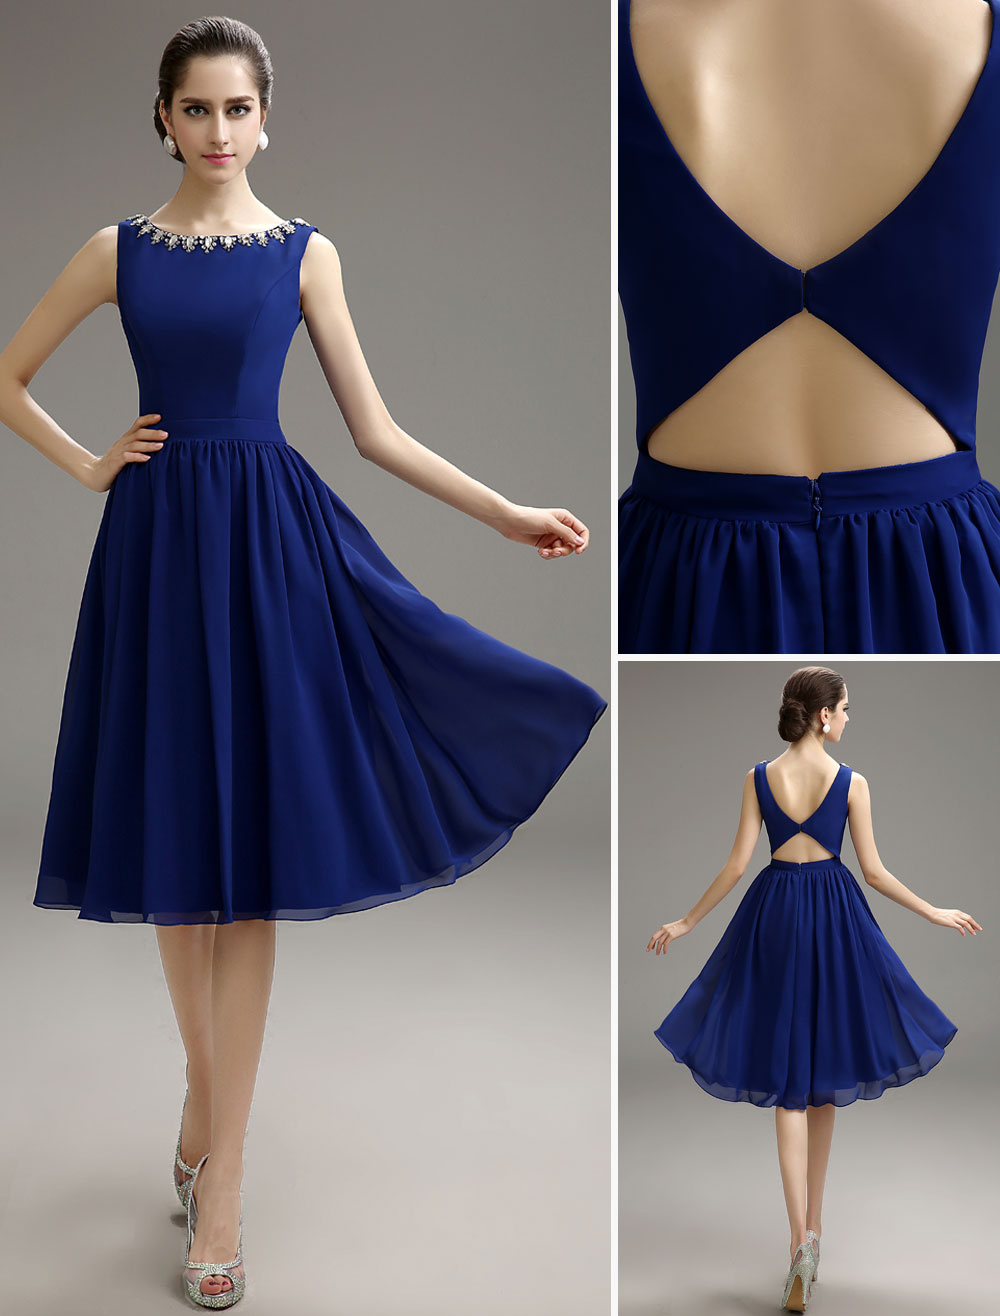 Blue Prom Dress 2018 Short Chiffon Beaded Cocktail Dress Royal Blue